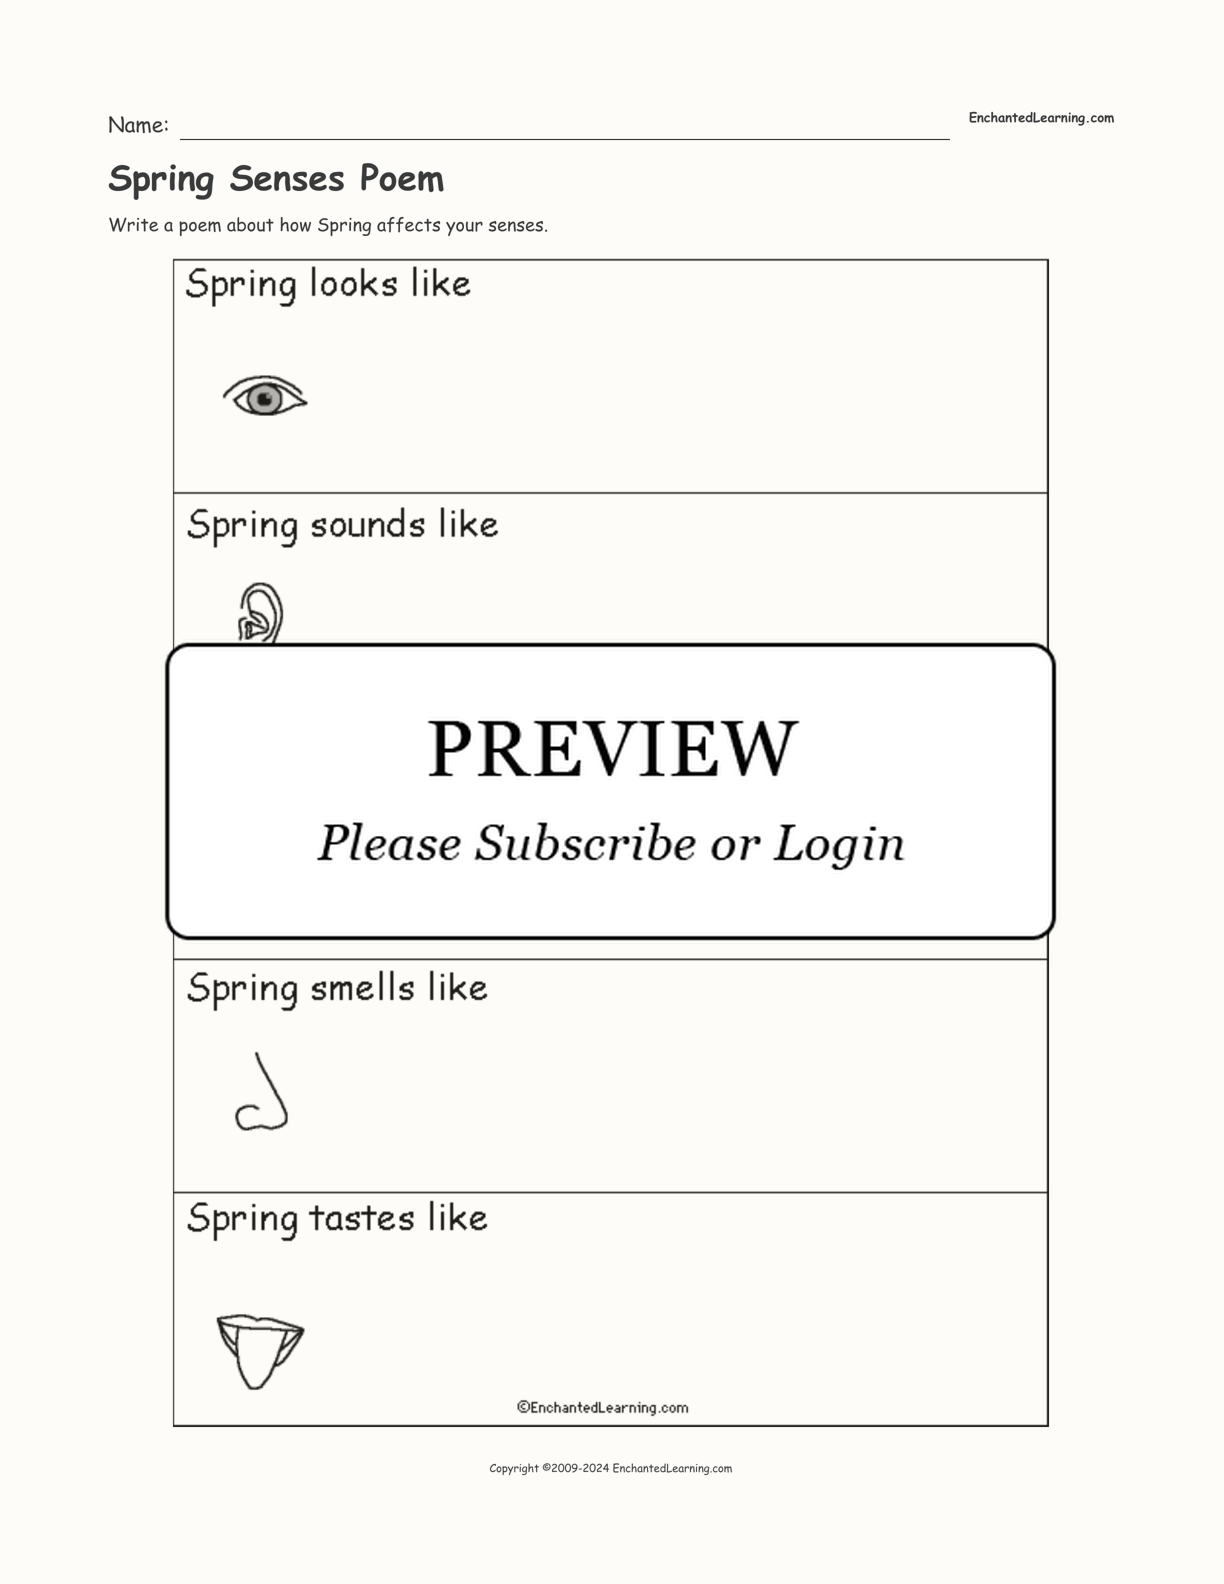 Spring Senses Poem interactive worksheet page 1